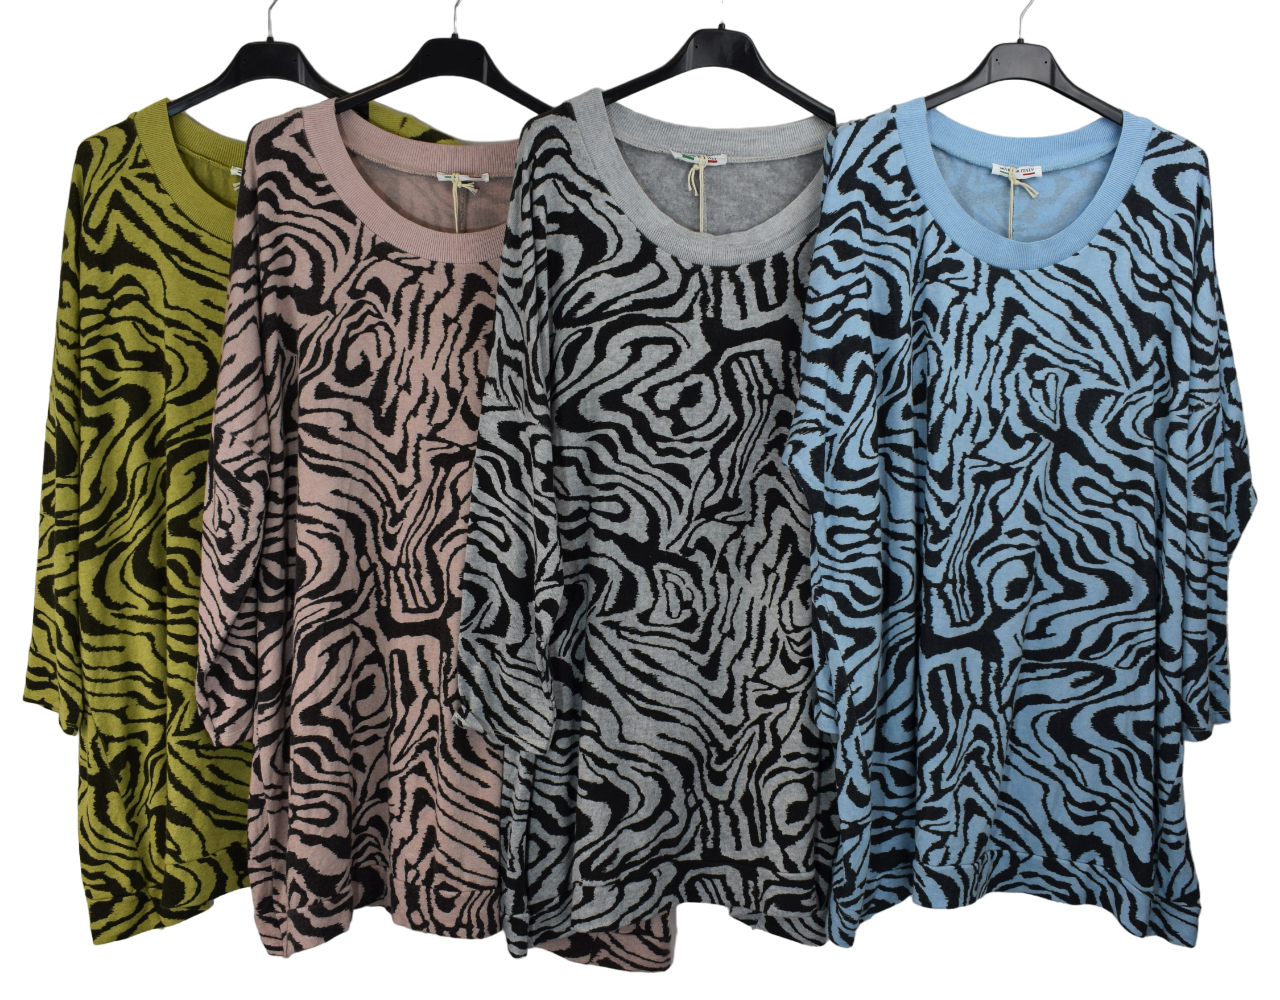 NEW Ladies Italian Lagenlook Zebra Print Oversized Tunic Top